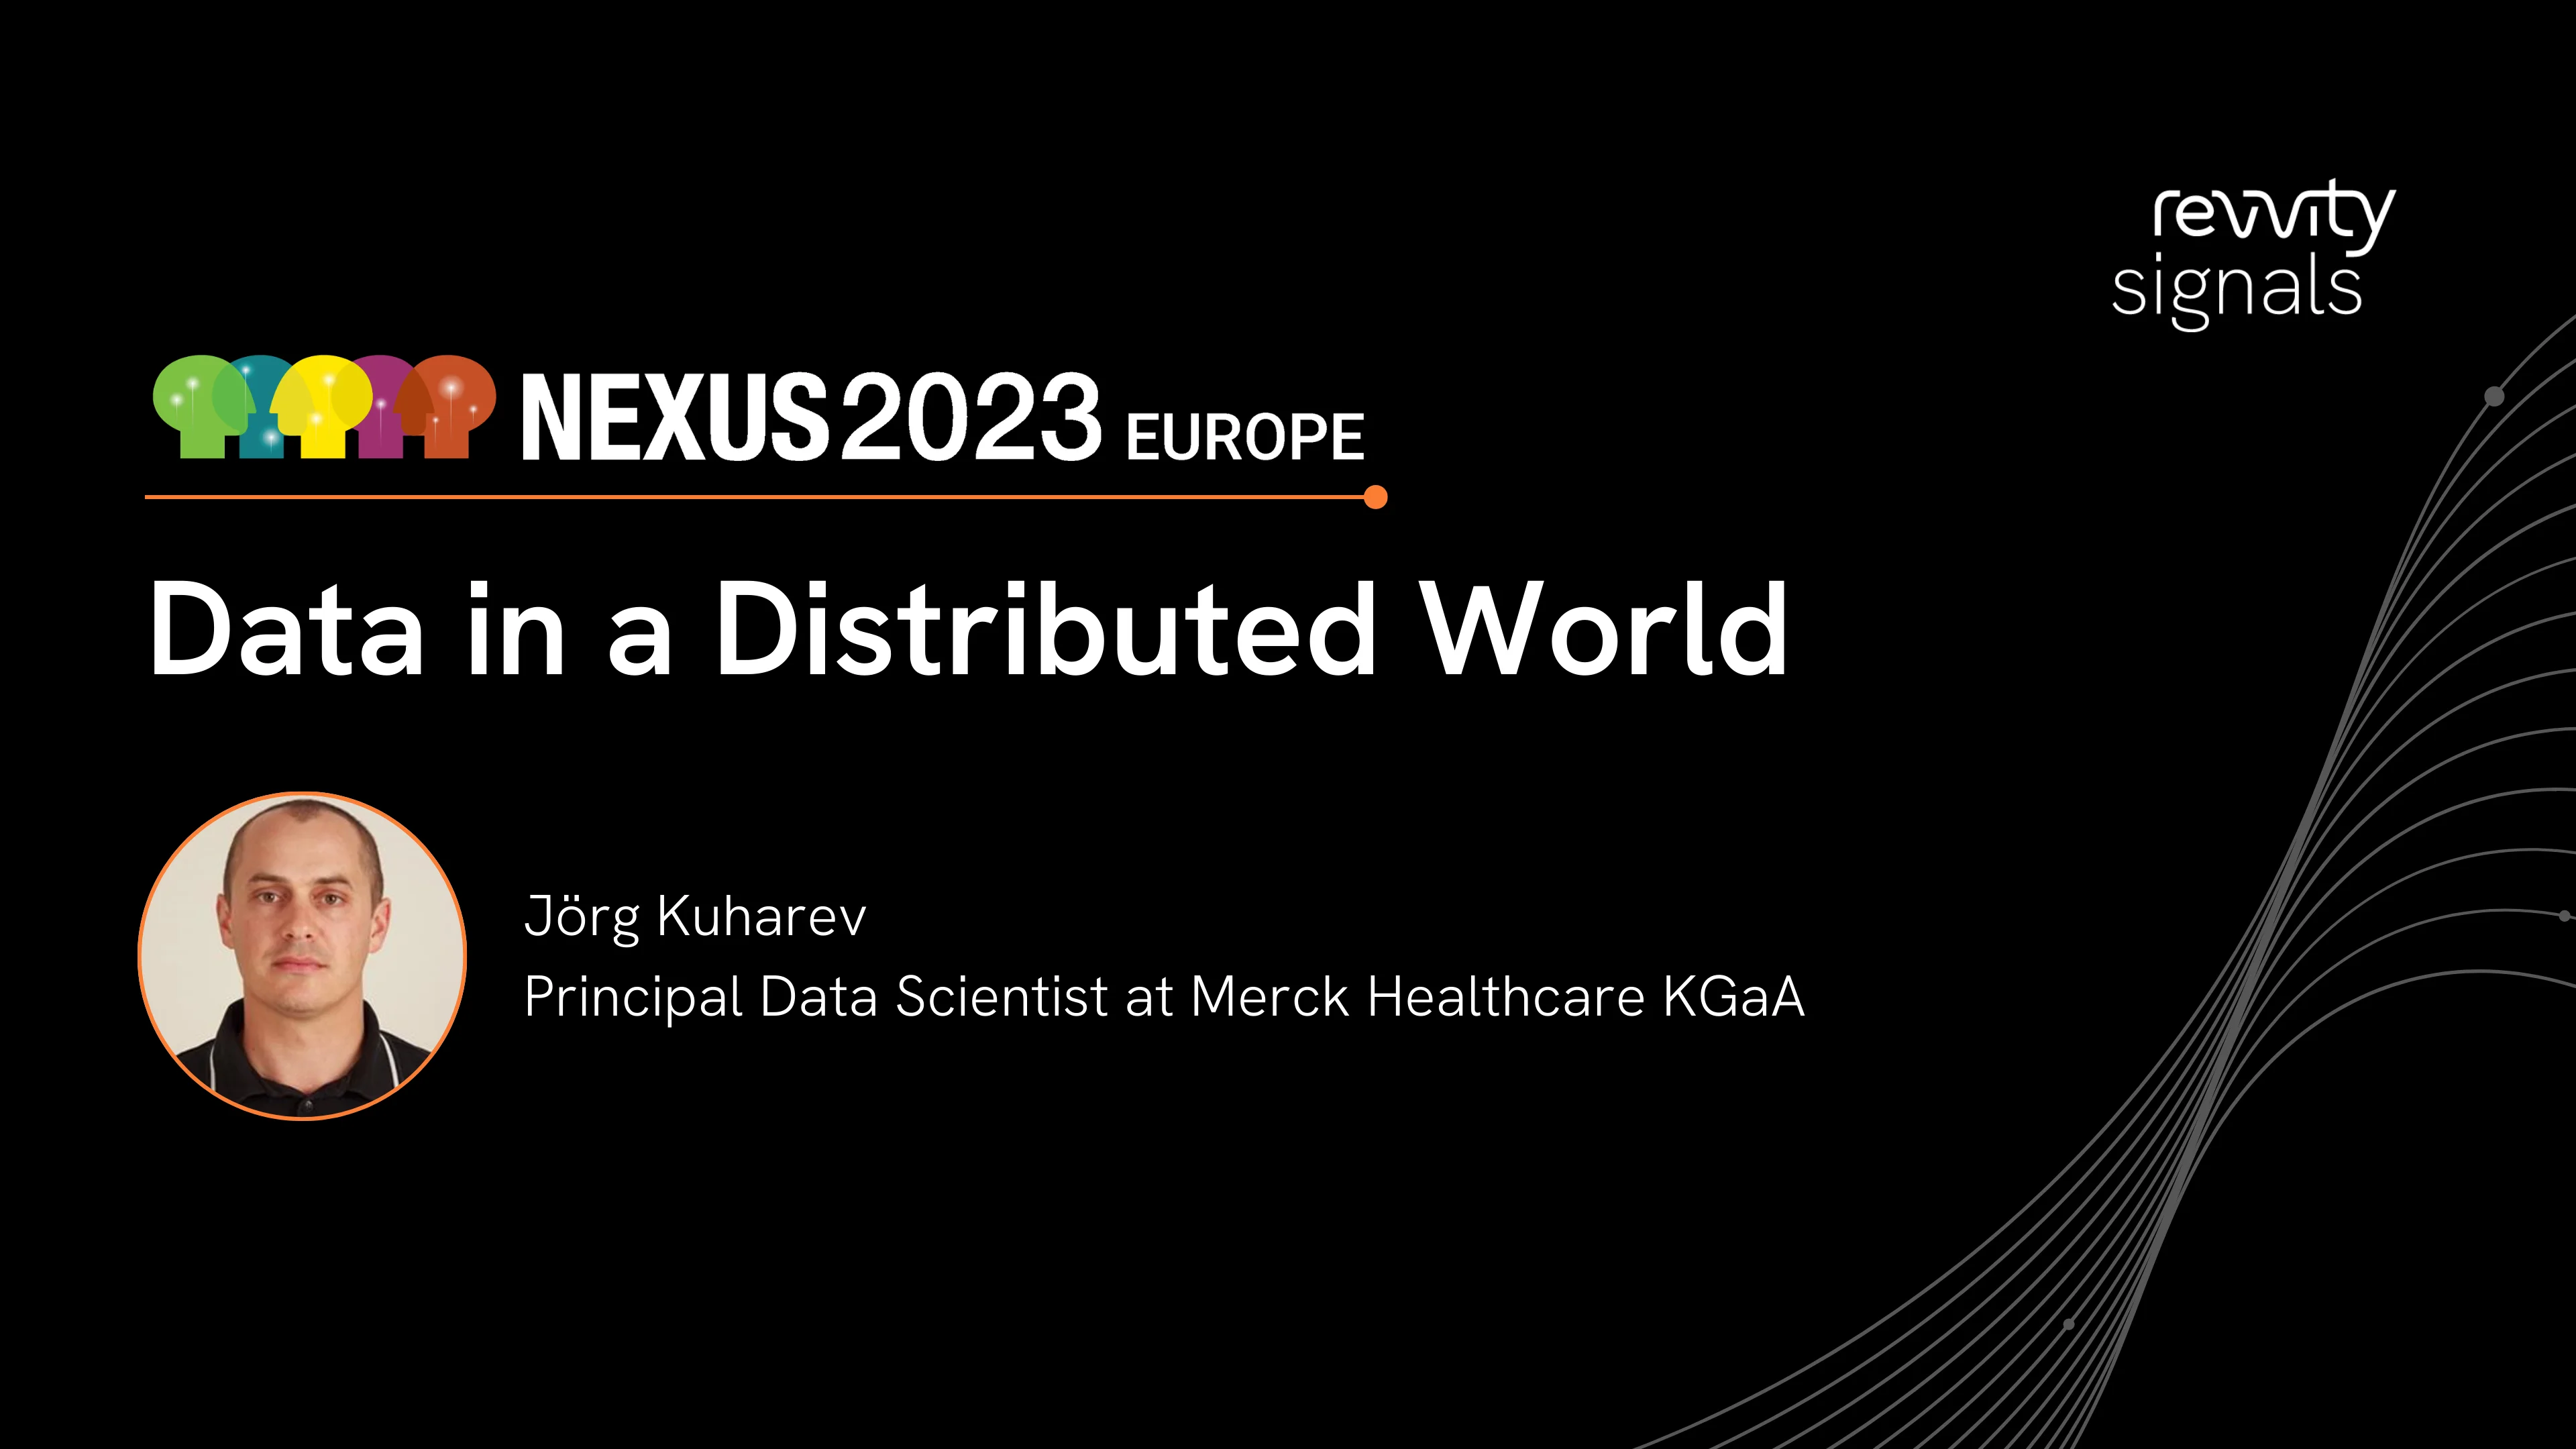 Watch Day 2, EU NEXUS 2023 - Data in a distributed world on Vimeo.